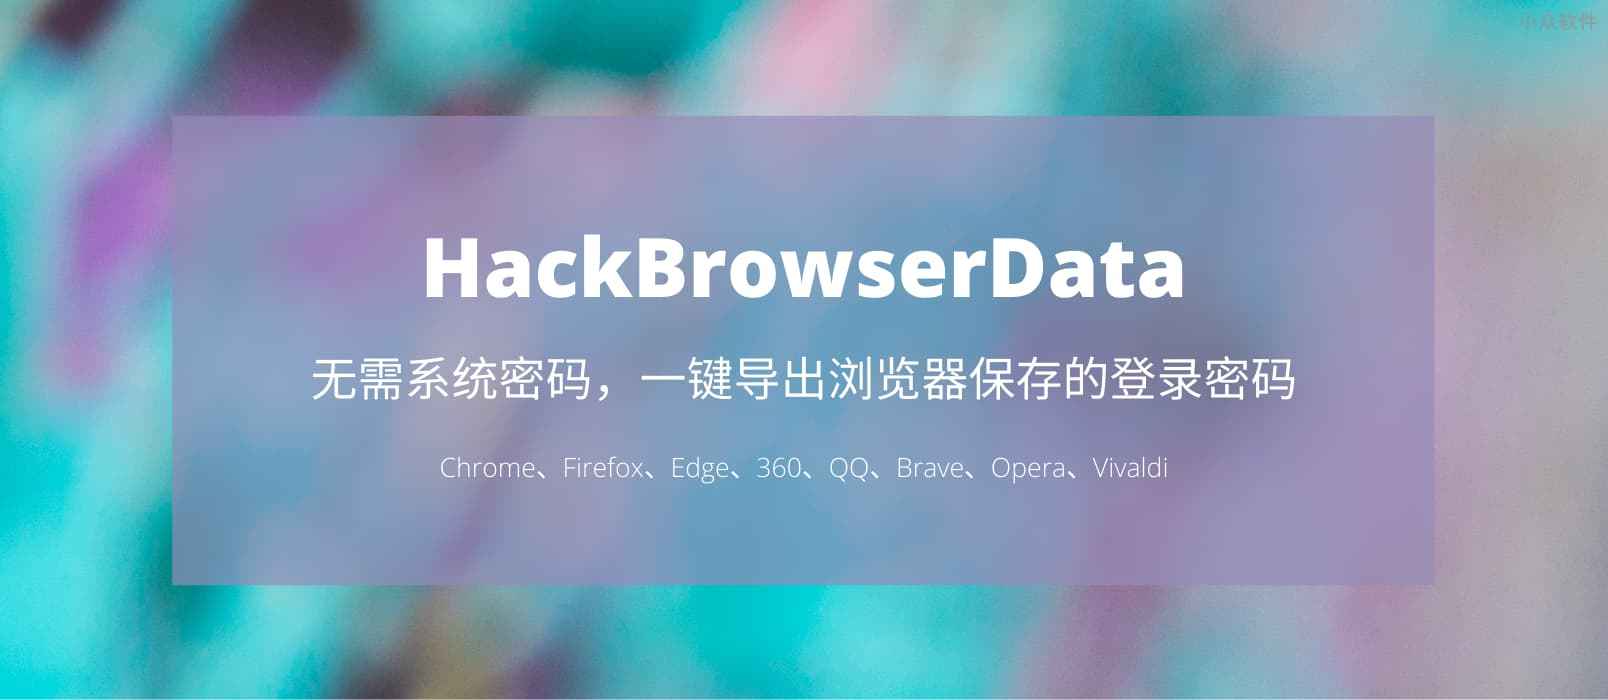 HackBrowserData – 无需密码，一键导出 Chrome、Firefox、Edge、360、QQ、Brave 浏览器保存的登录密码、历史